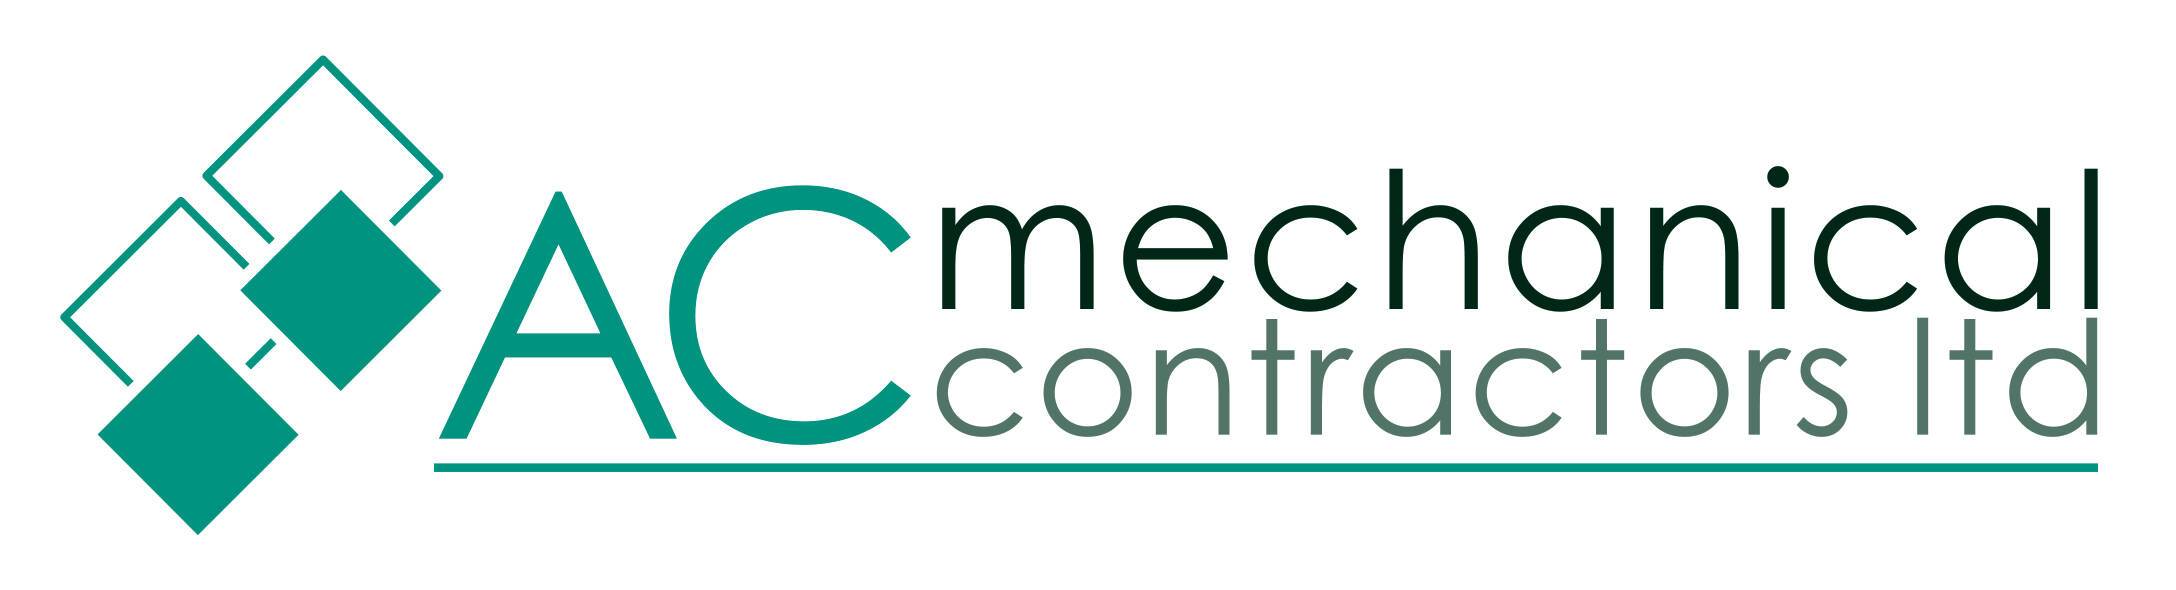 AC Mechanical Contractors Ltd